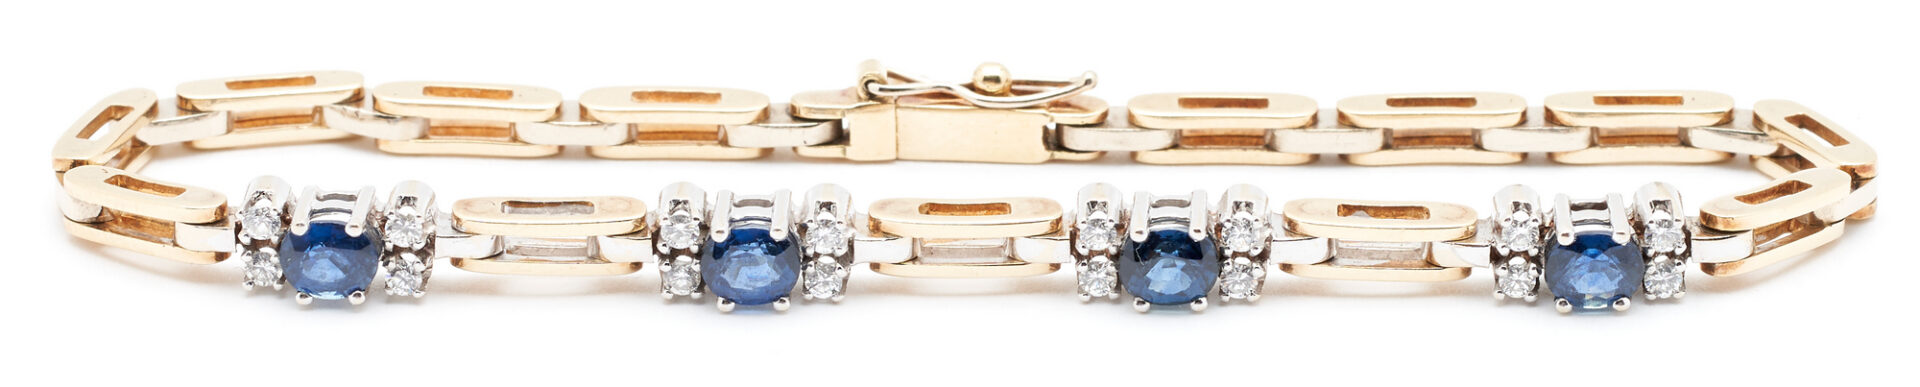 Lot 1180: 14K Sapphire & Diamond Bracelet